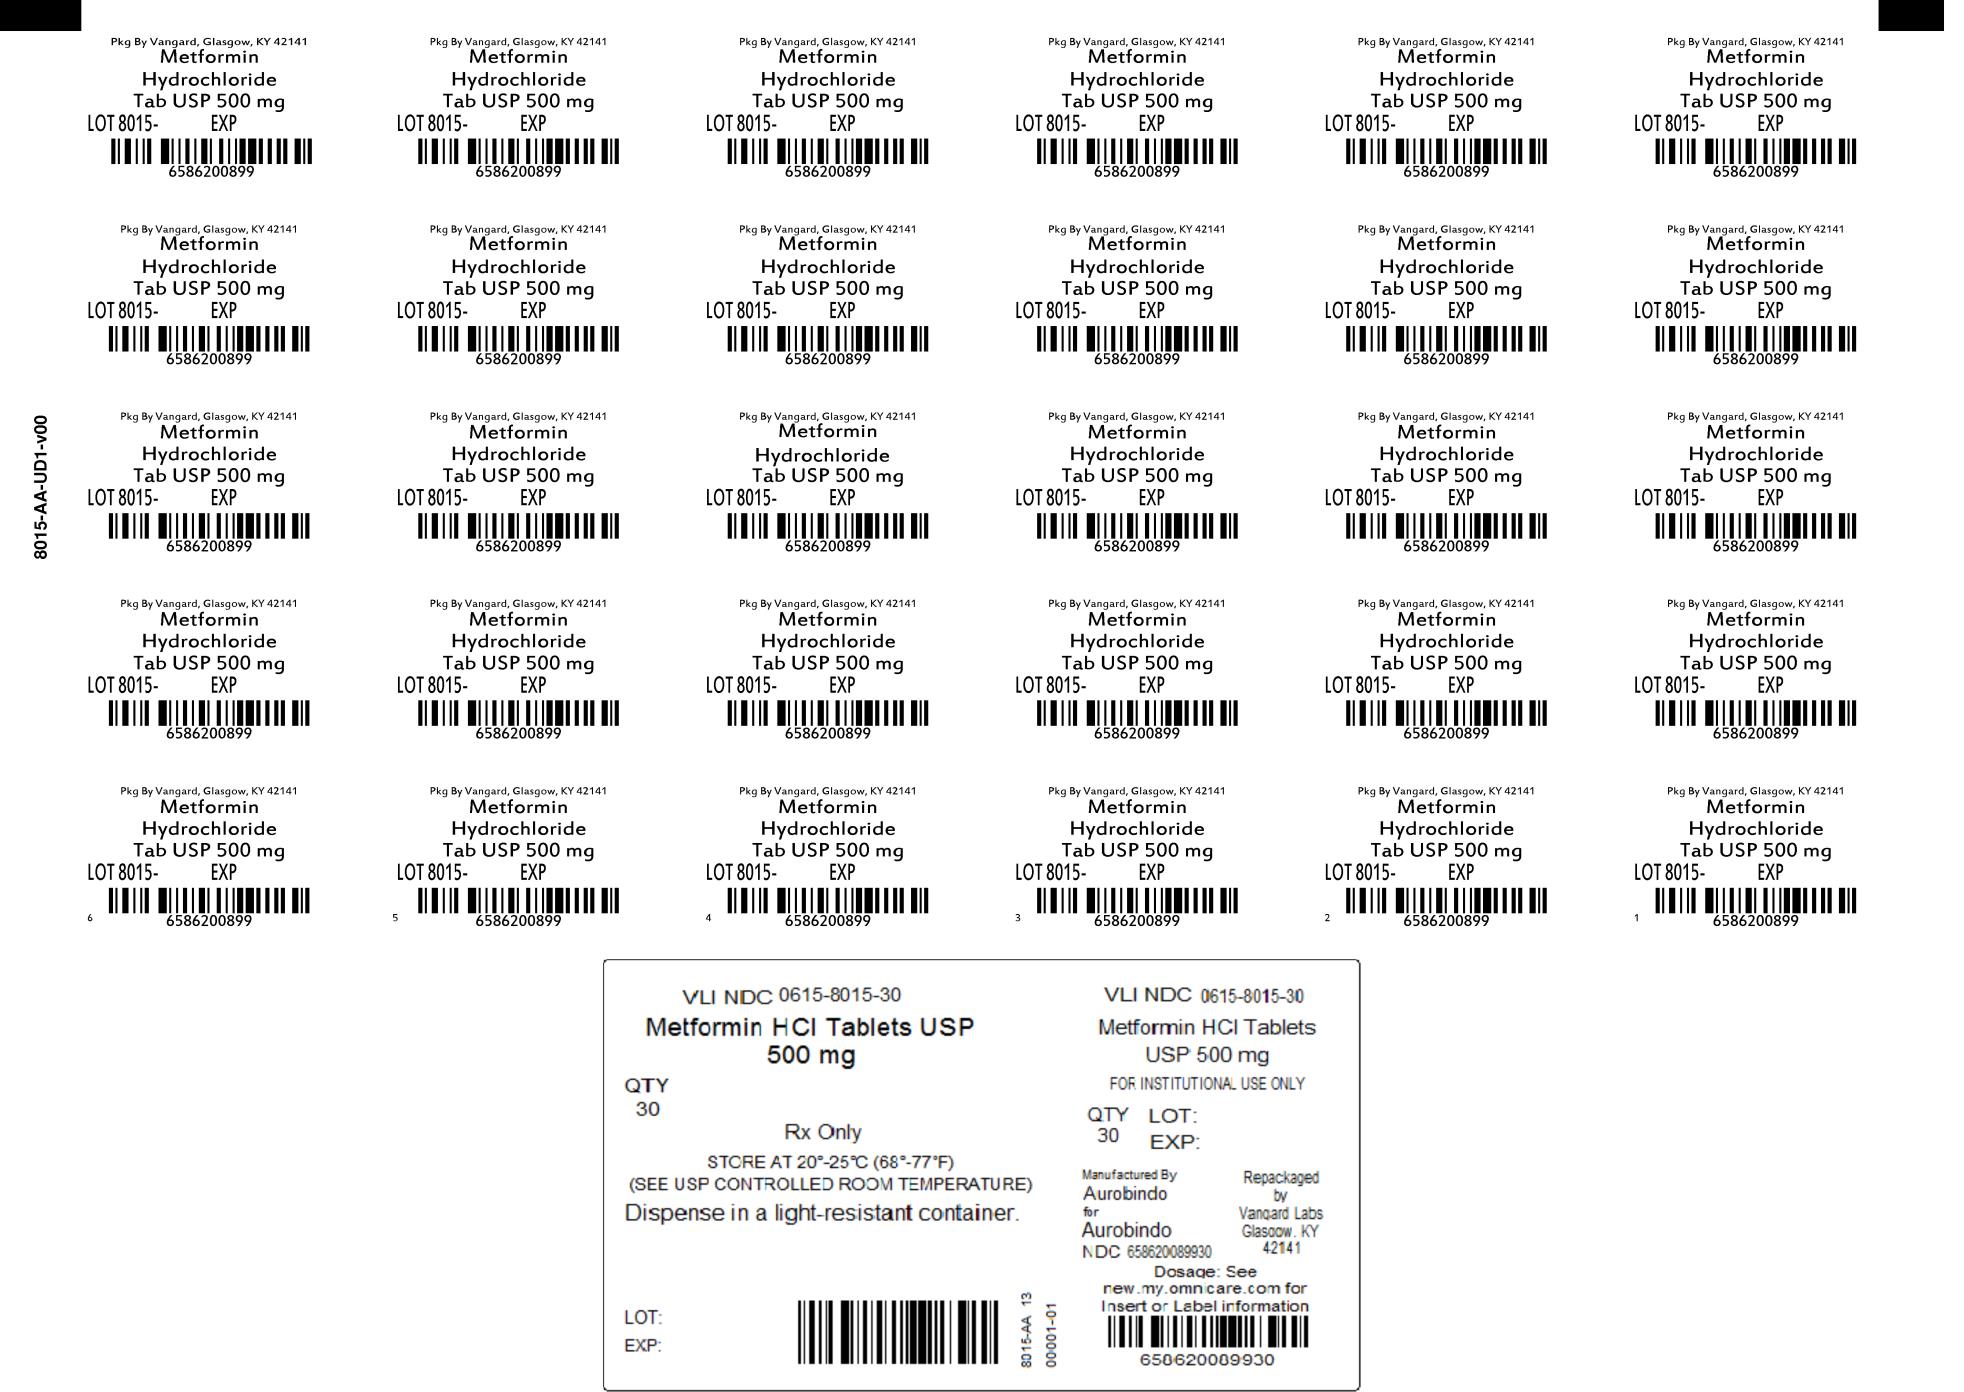 Principal Display Panel-Metformin HCl USP 500mg Tab Unit dose label